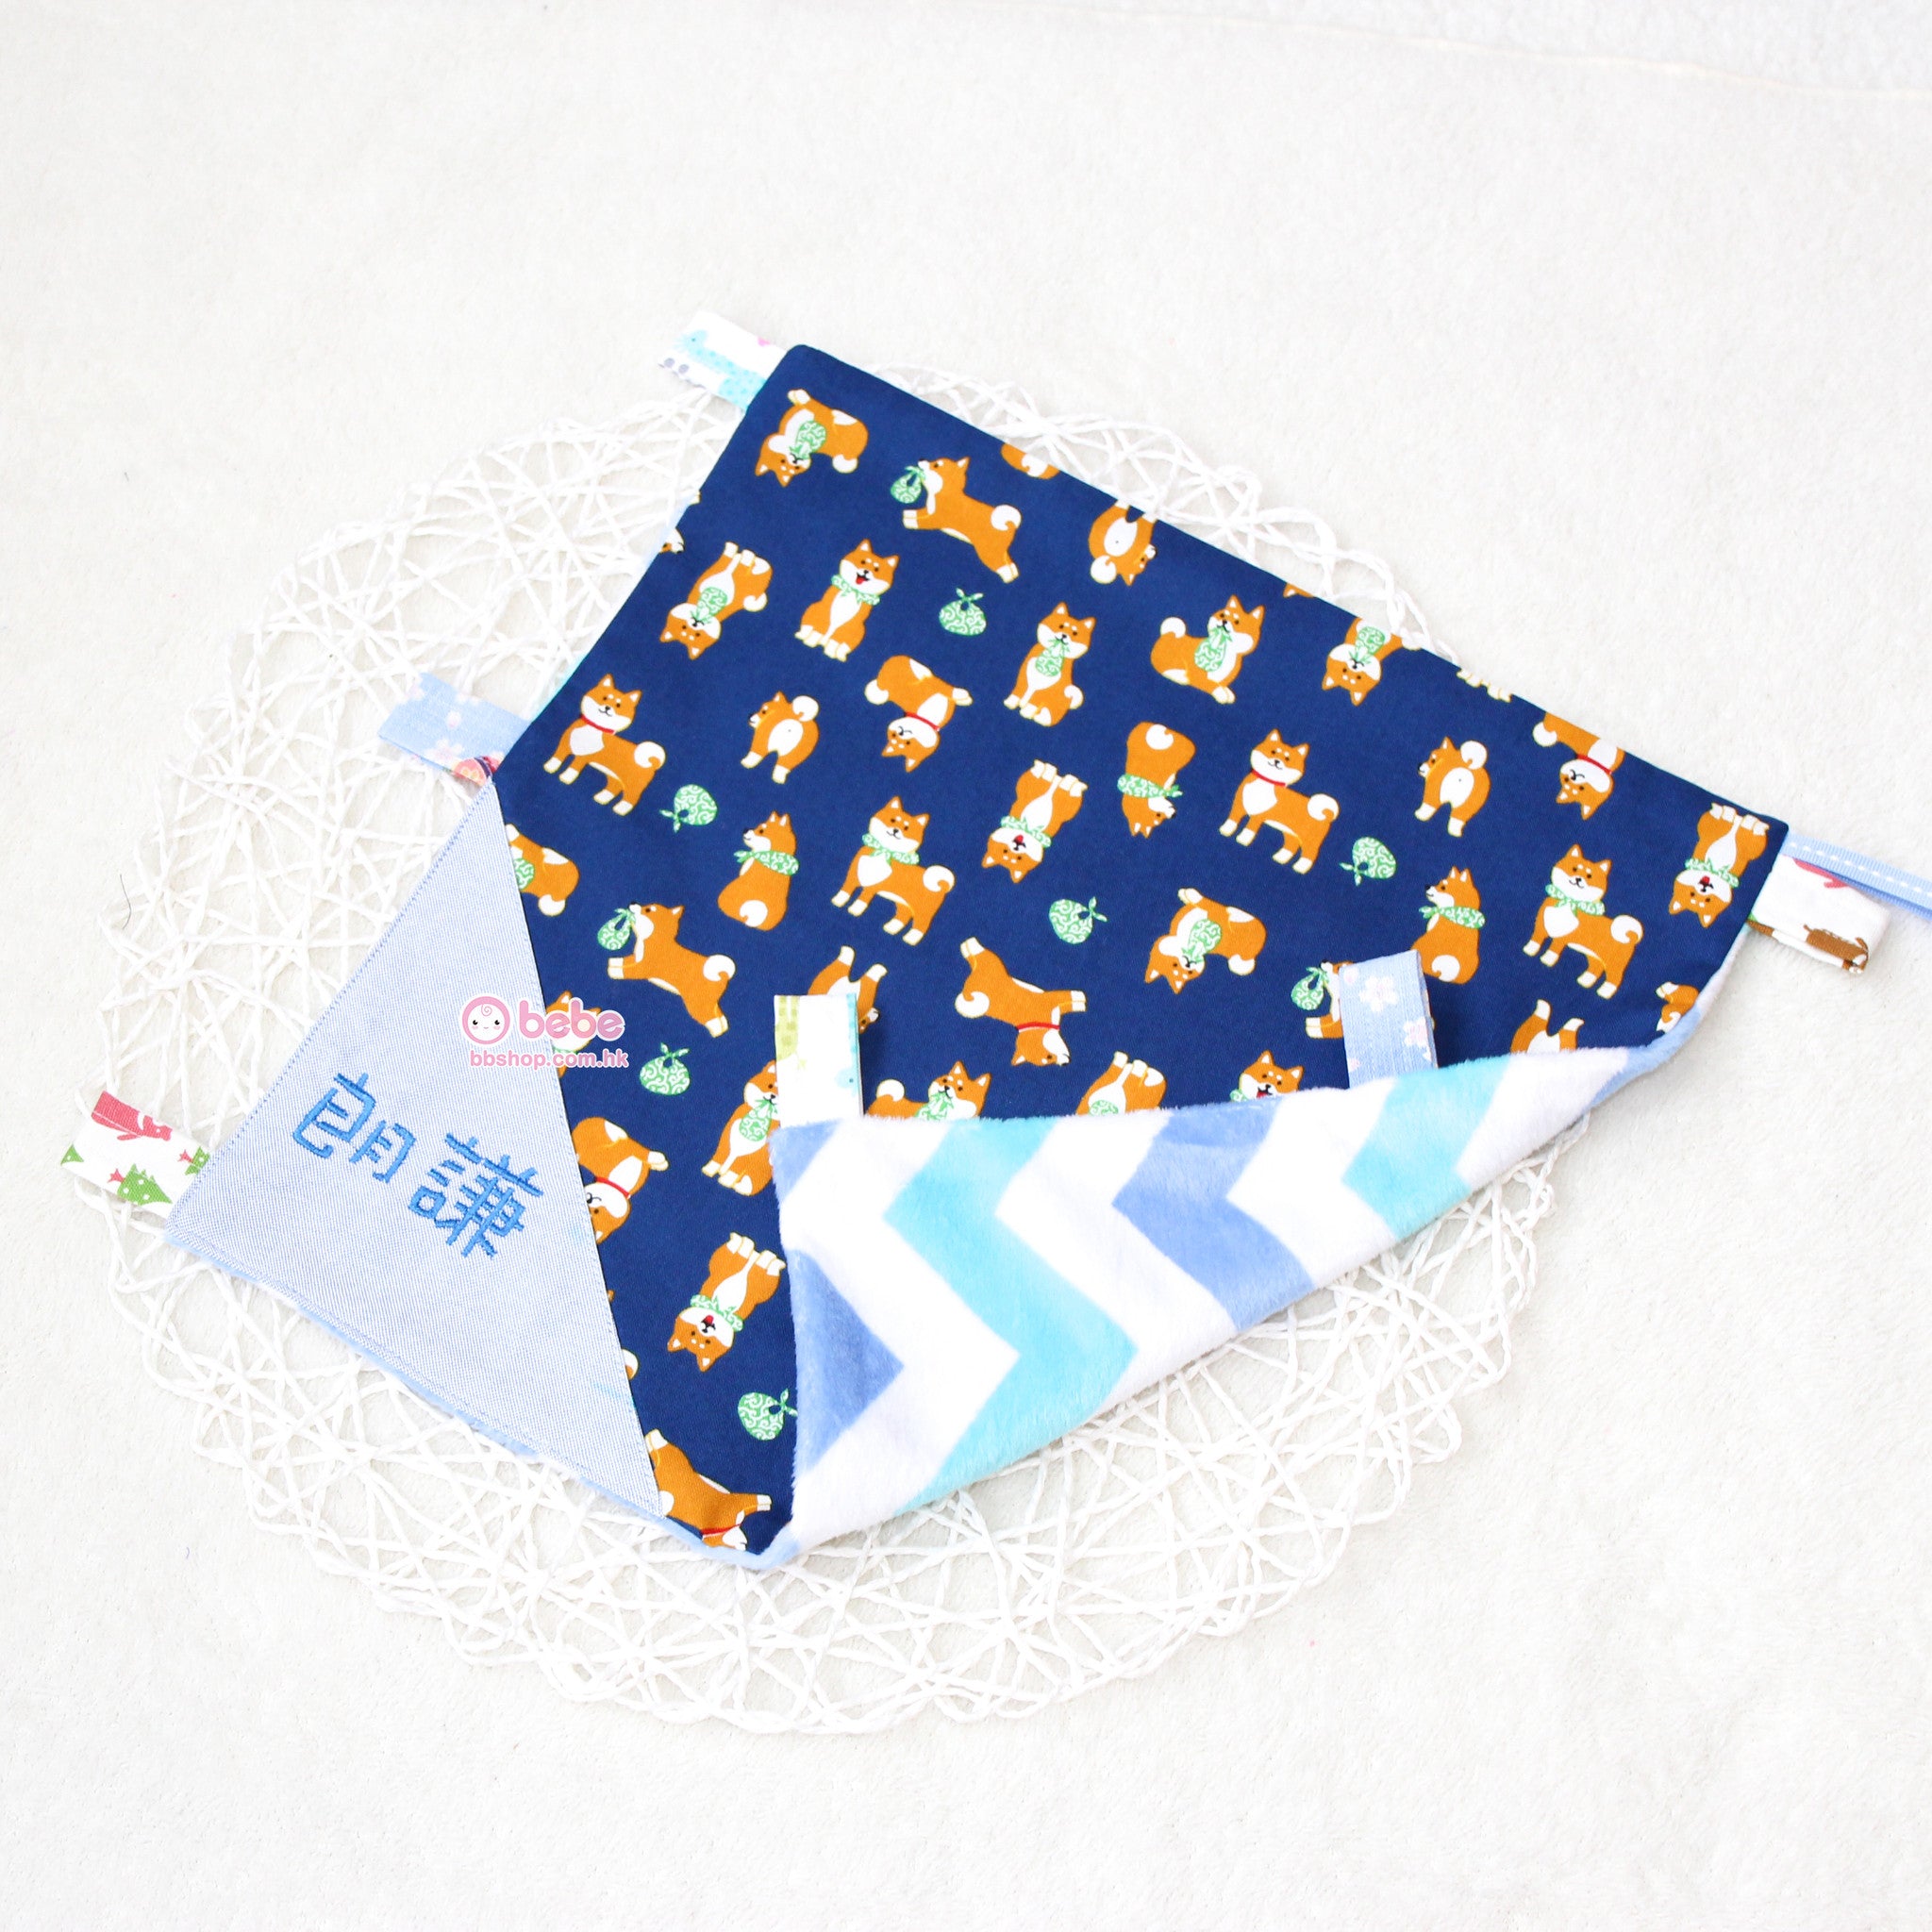 HMC100 自選拼布繡名嬰兒安撫巾 Customized Fabric Personalized Baby Blankie